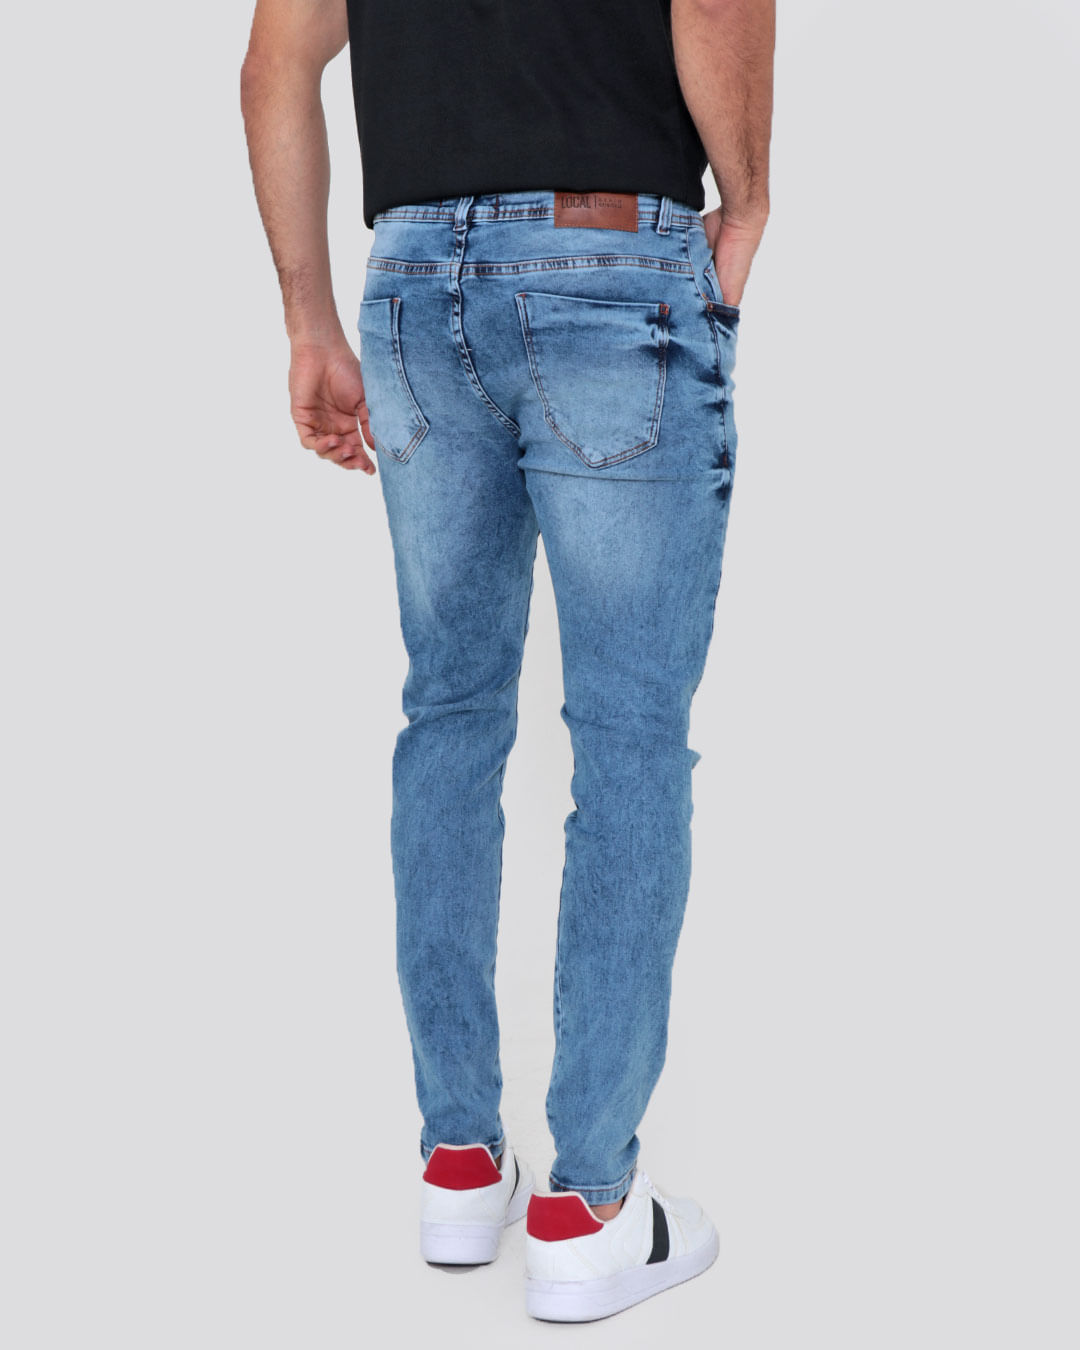 23121000909045-blue-jeans-medio-3